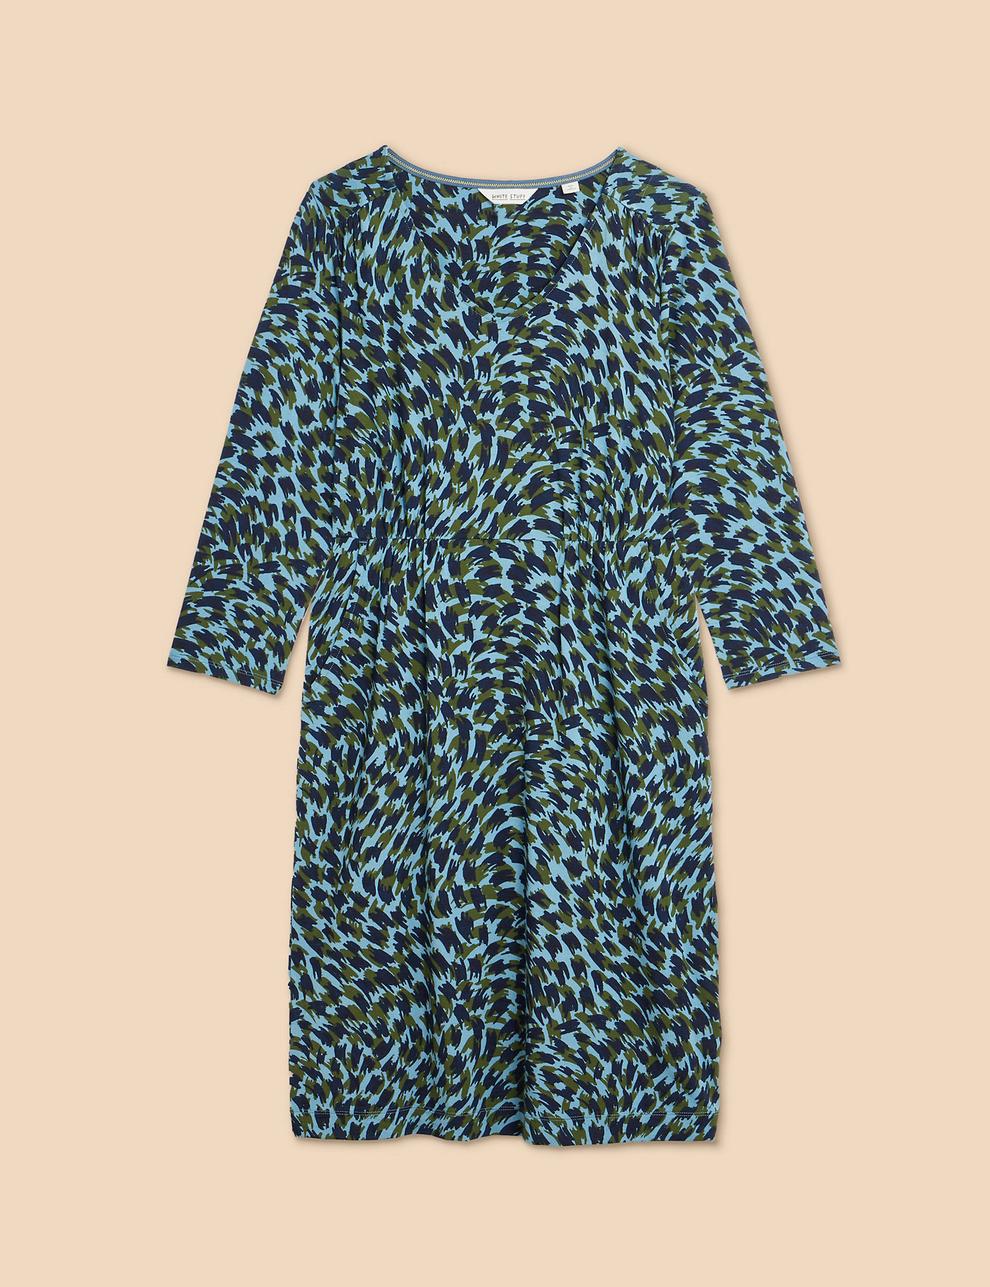 Jersey Printed V-Neck Knee Length Tea Dress offers at £27 in Marks & Spencer